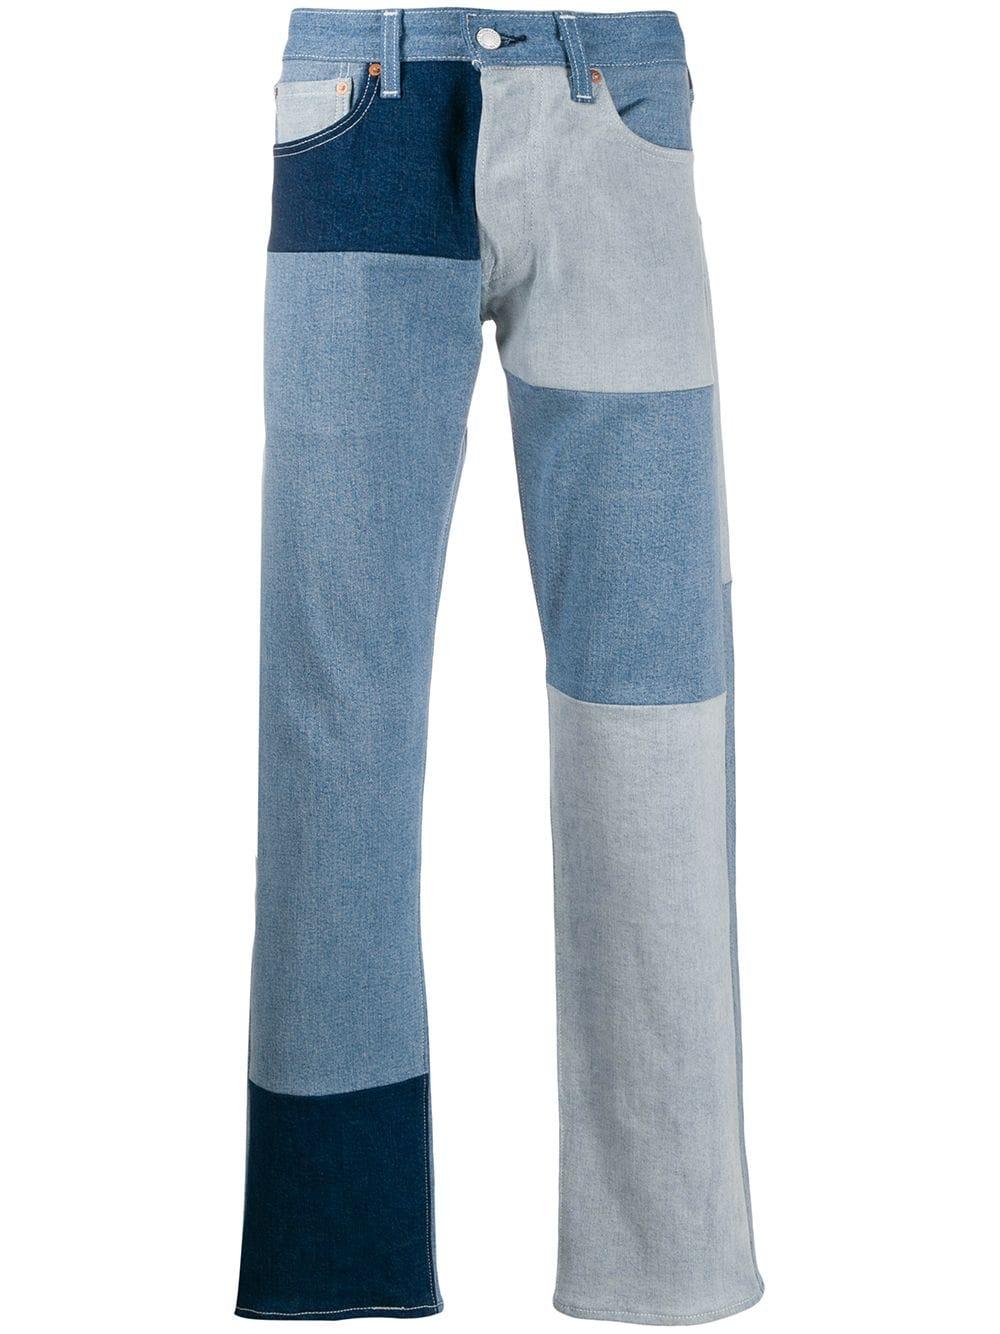 Levi's Denim Patchwork Jeans in Blue for Men - Lyst